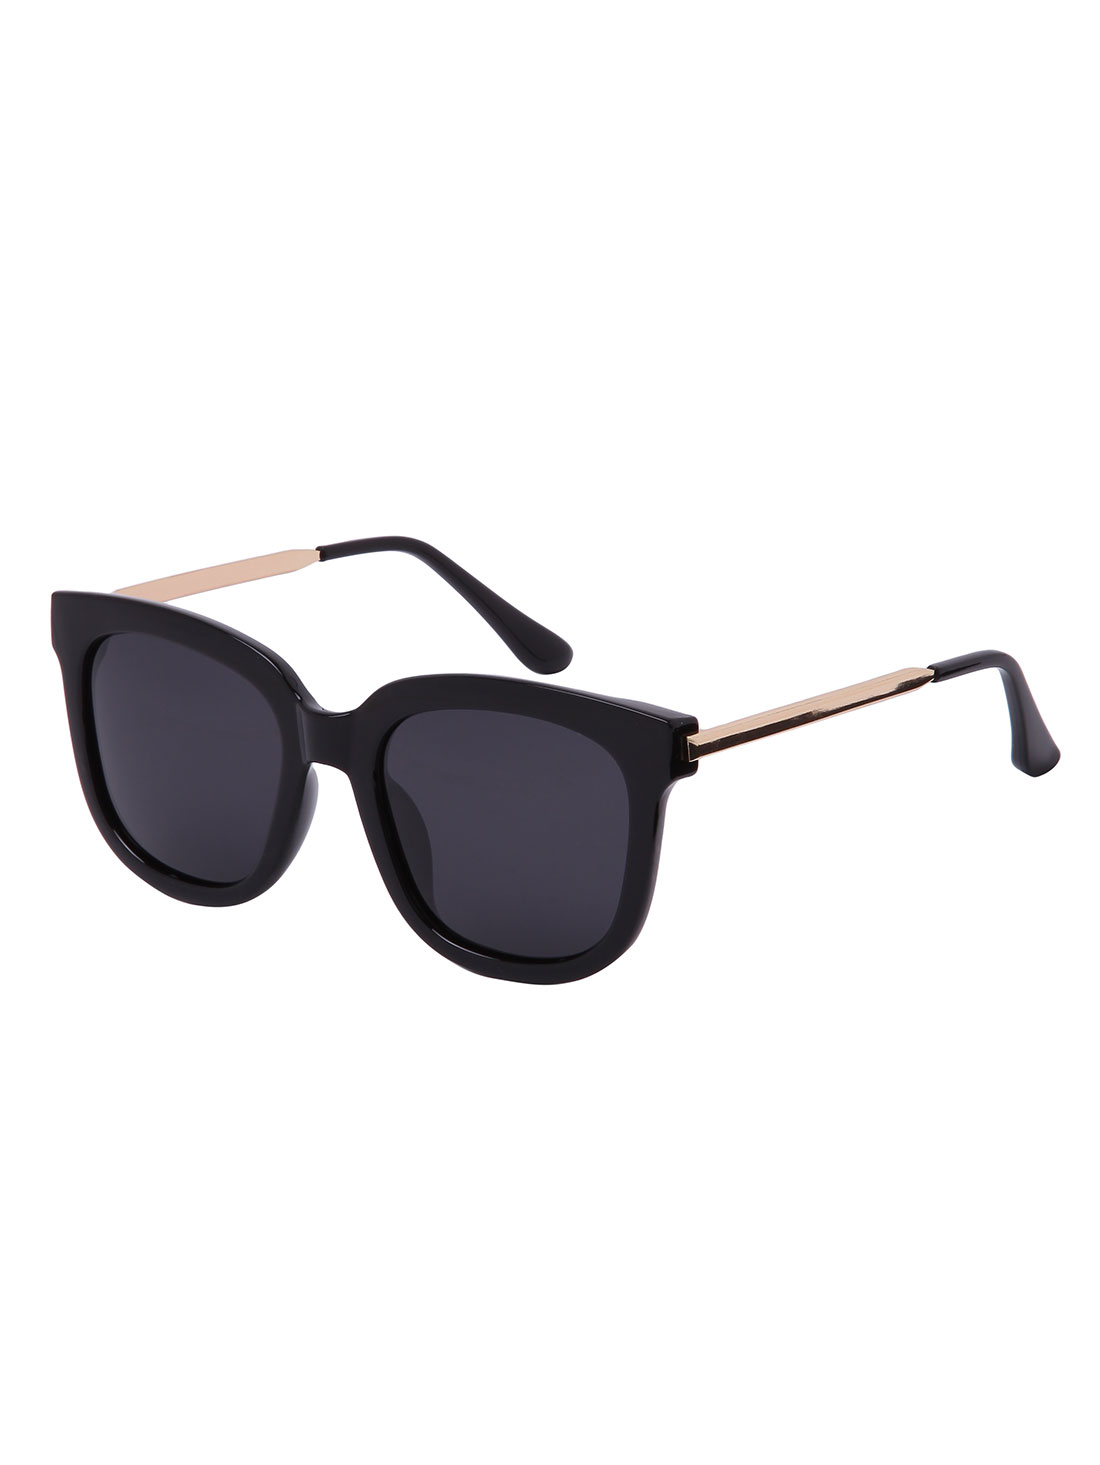 Retro Black Lenses Oversized Square Sunglasses